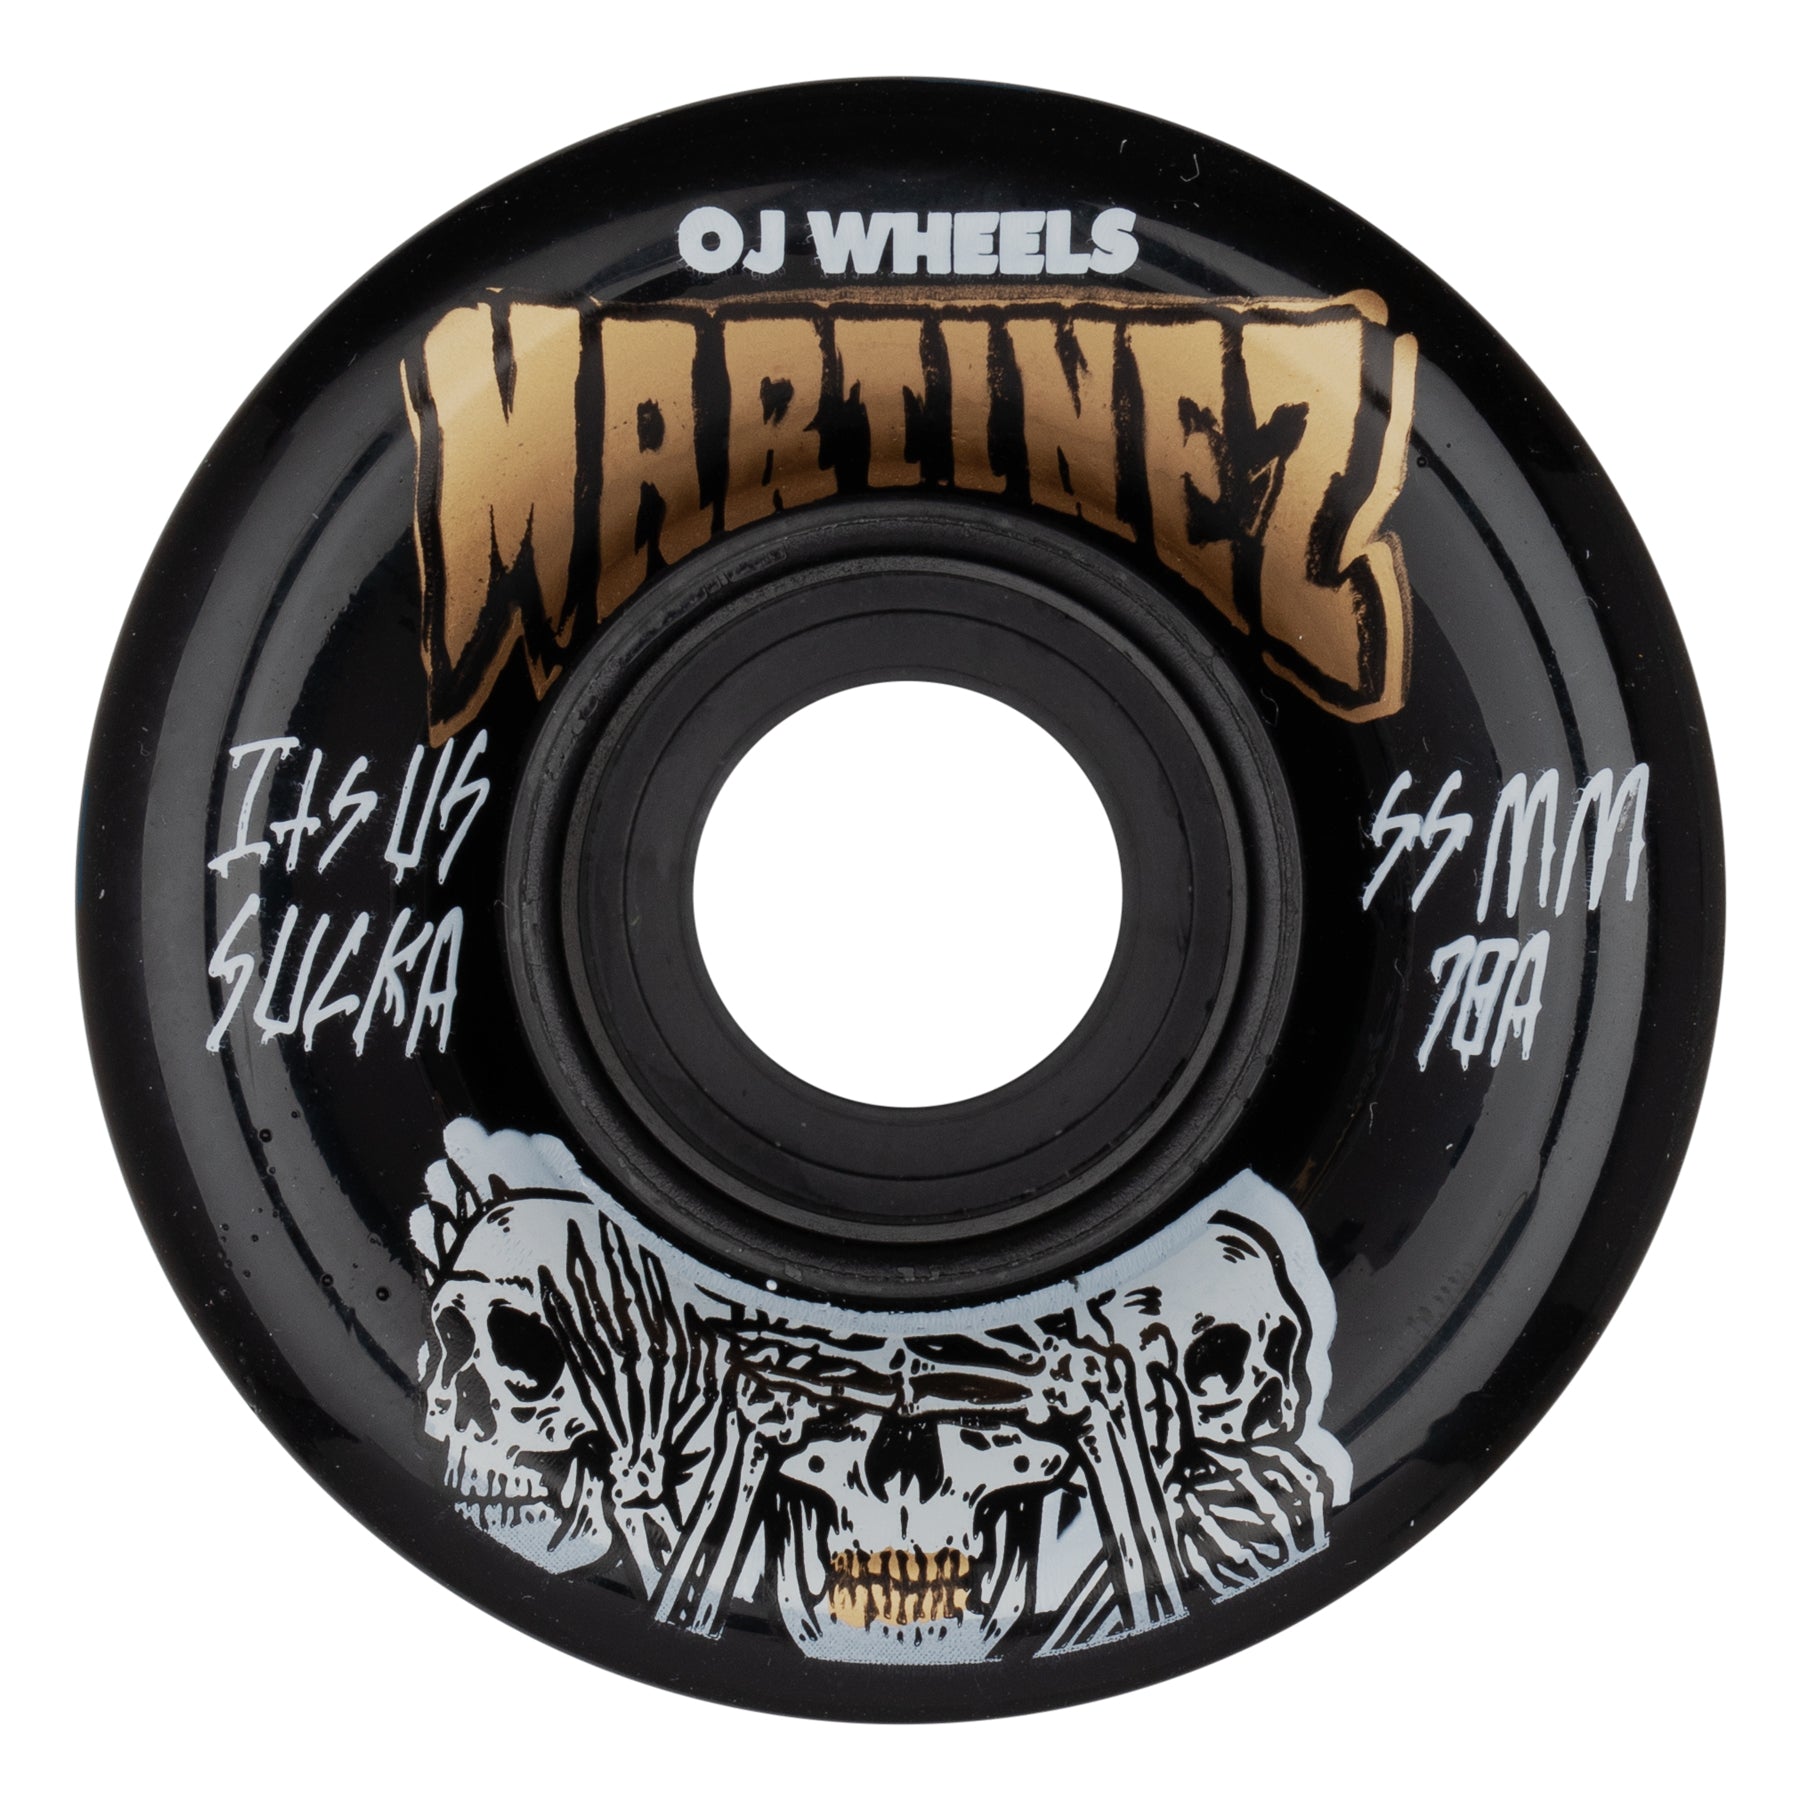 OJ Wheels Martinez Hear No Evil Mini Super Juice Cruiser Black 55mm 78a